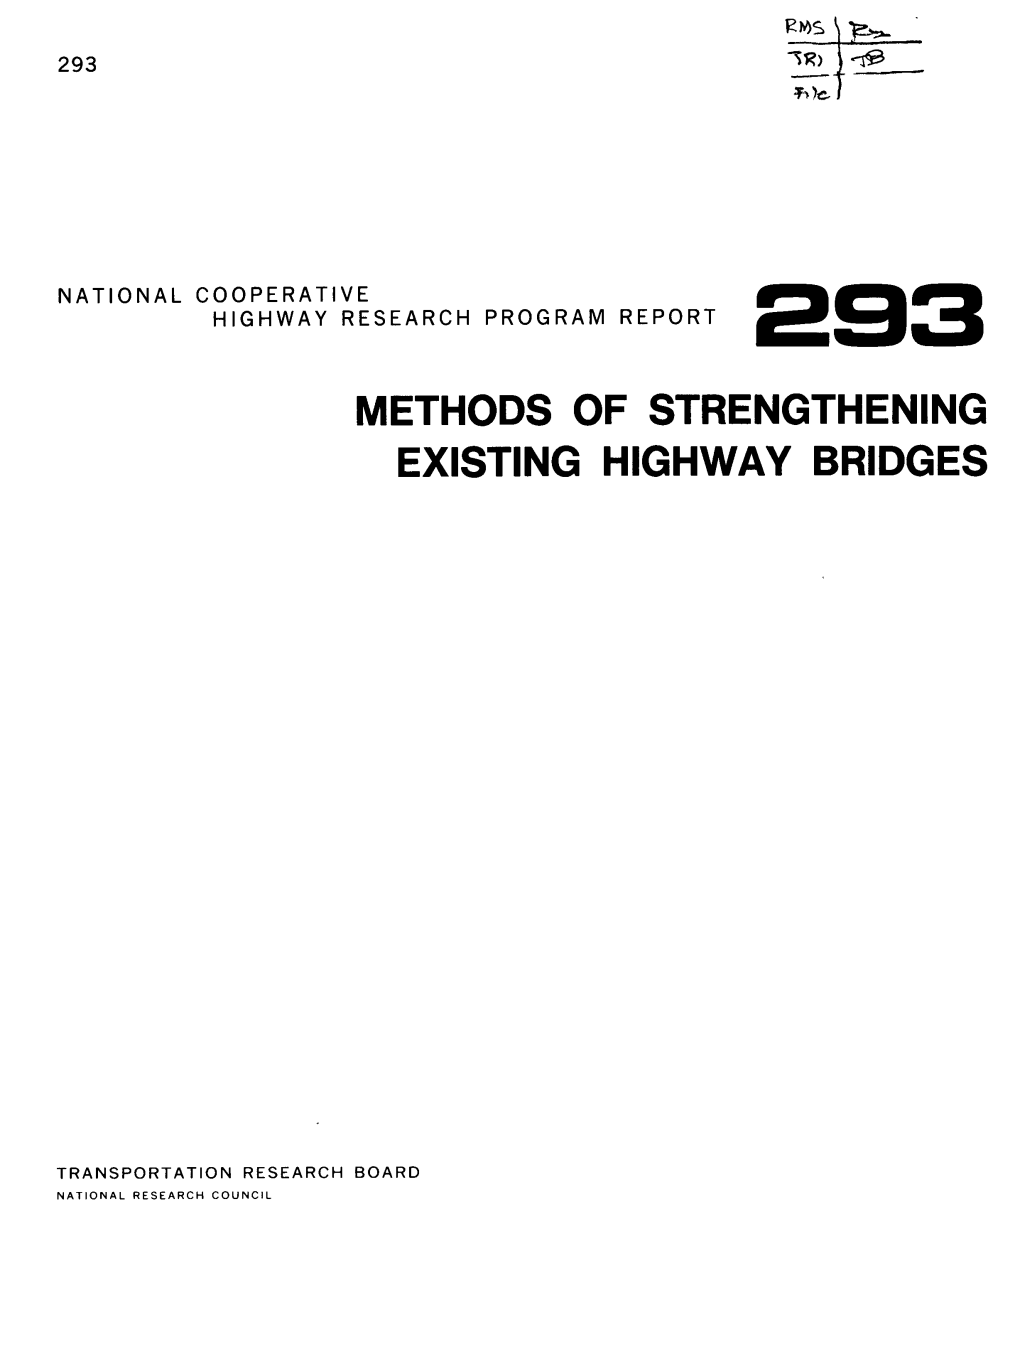 Methods of Strengthening Existing Highway Bridges